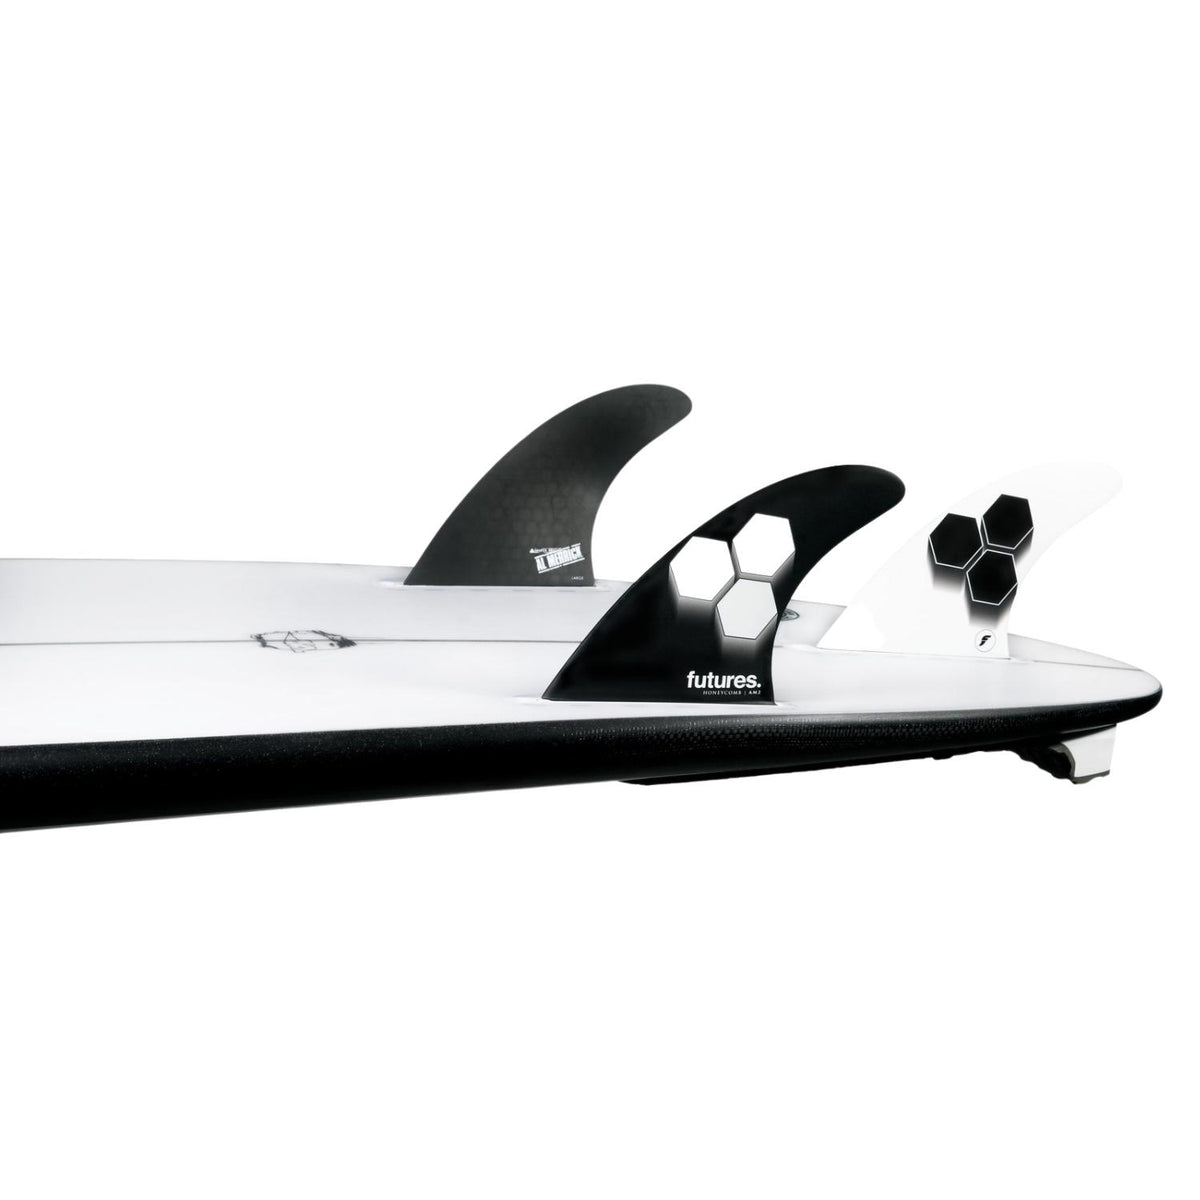 Futures AM2 Honeycomb Thruster Surfboard Fins (Large) - Black/White - Futures Fins by Futures Large Fins